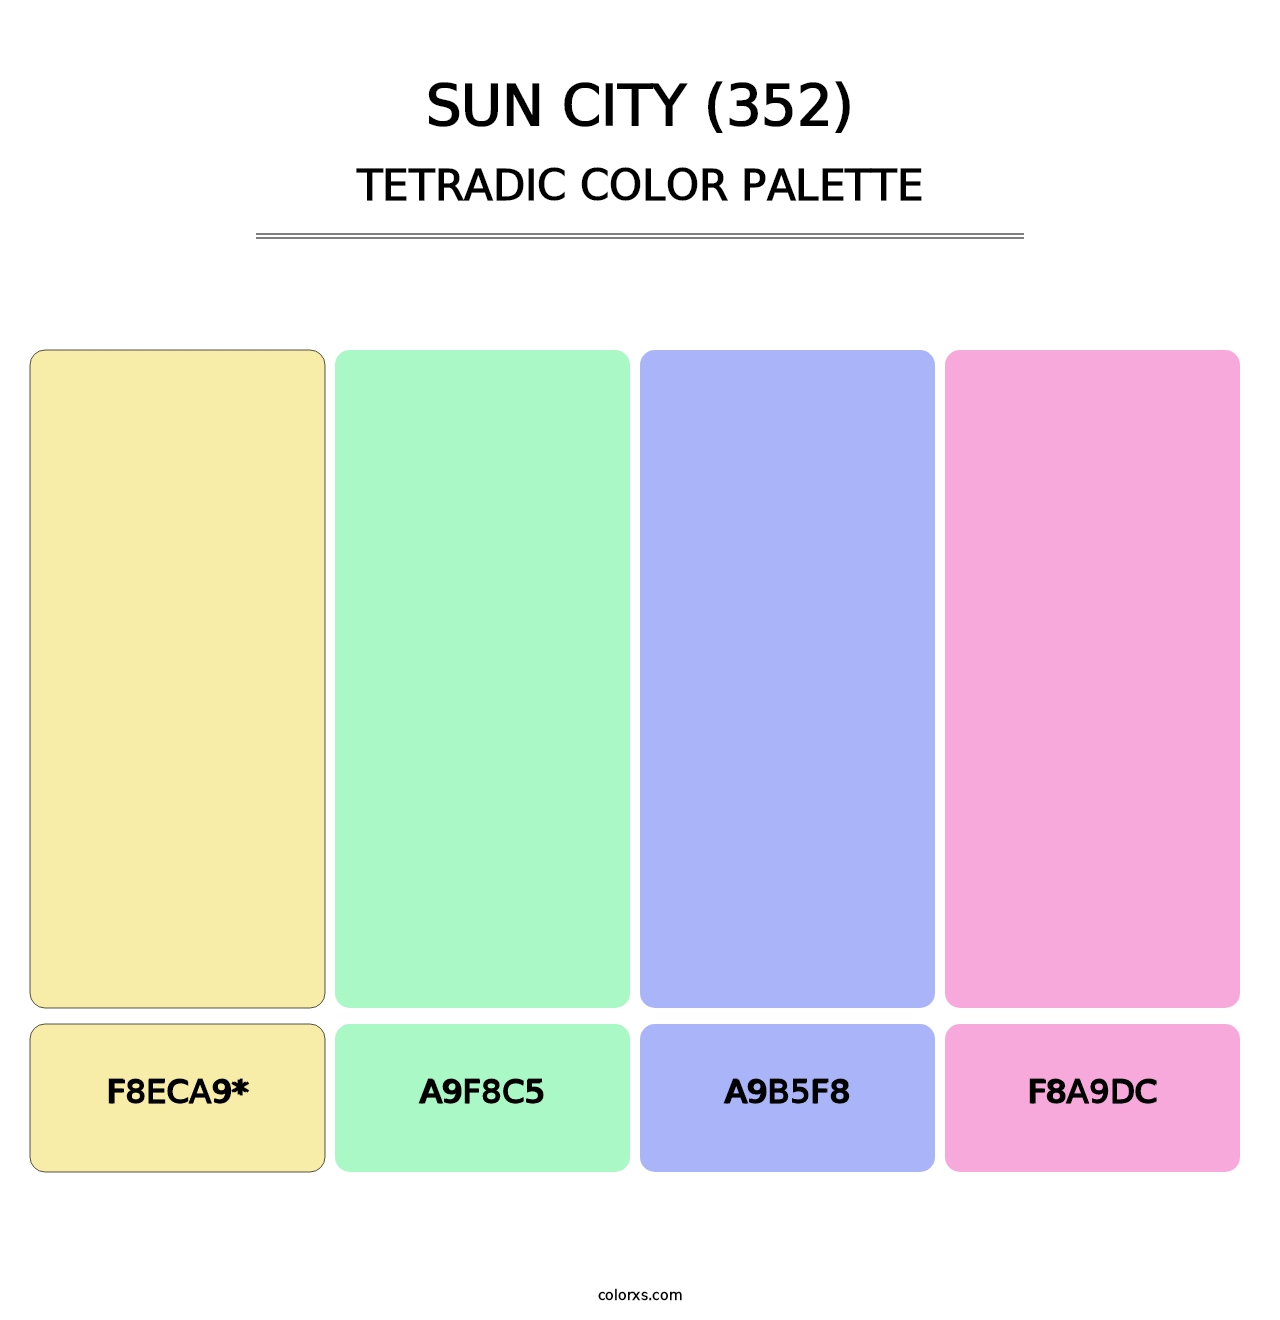 Sun City (352) - Tetradic Color Palette